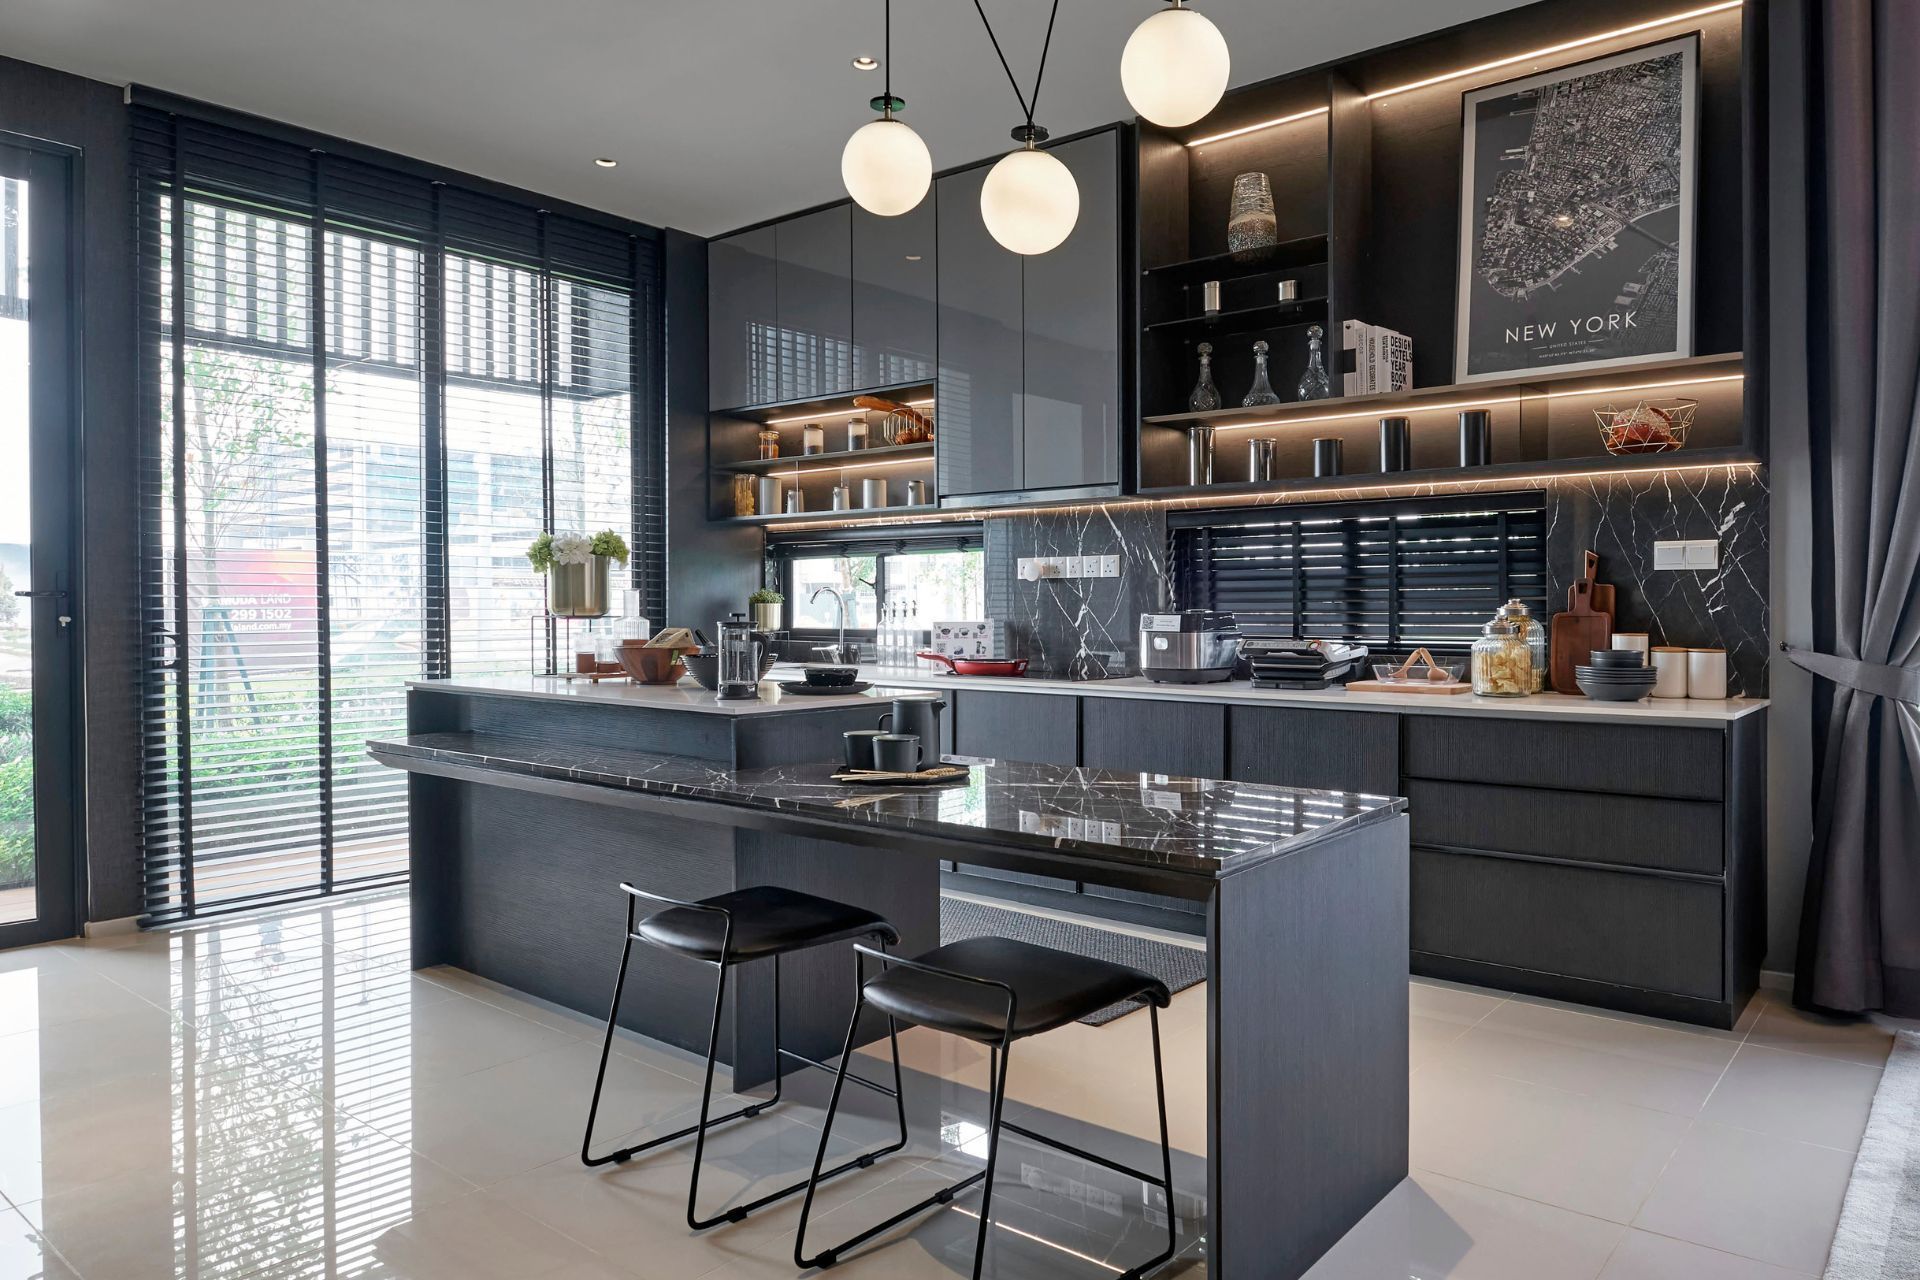 Sleek, modern kitchen with marble island and elegant lighting in Athens, GA.